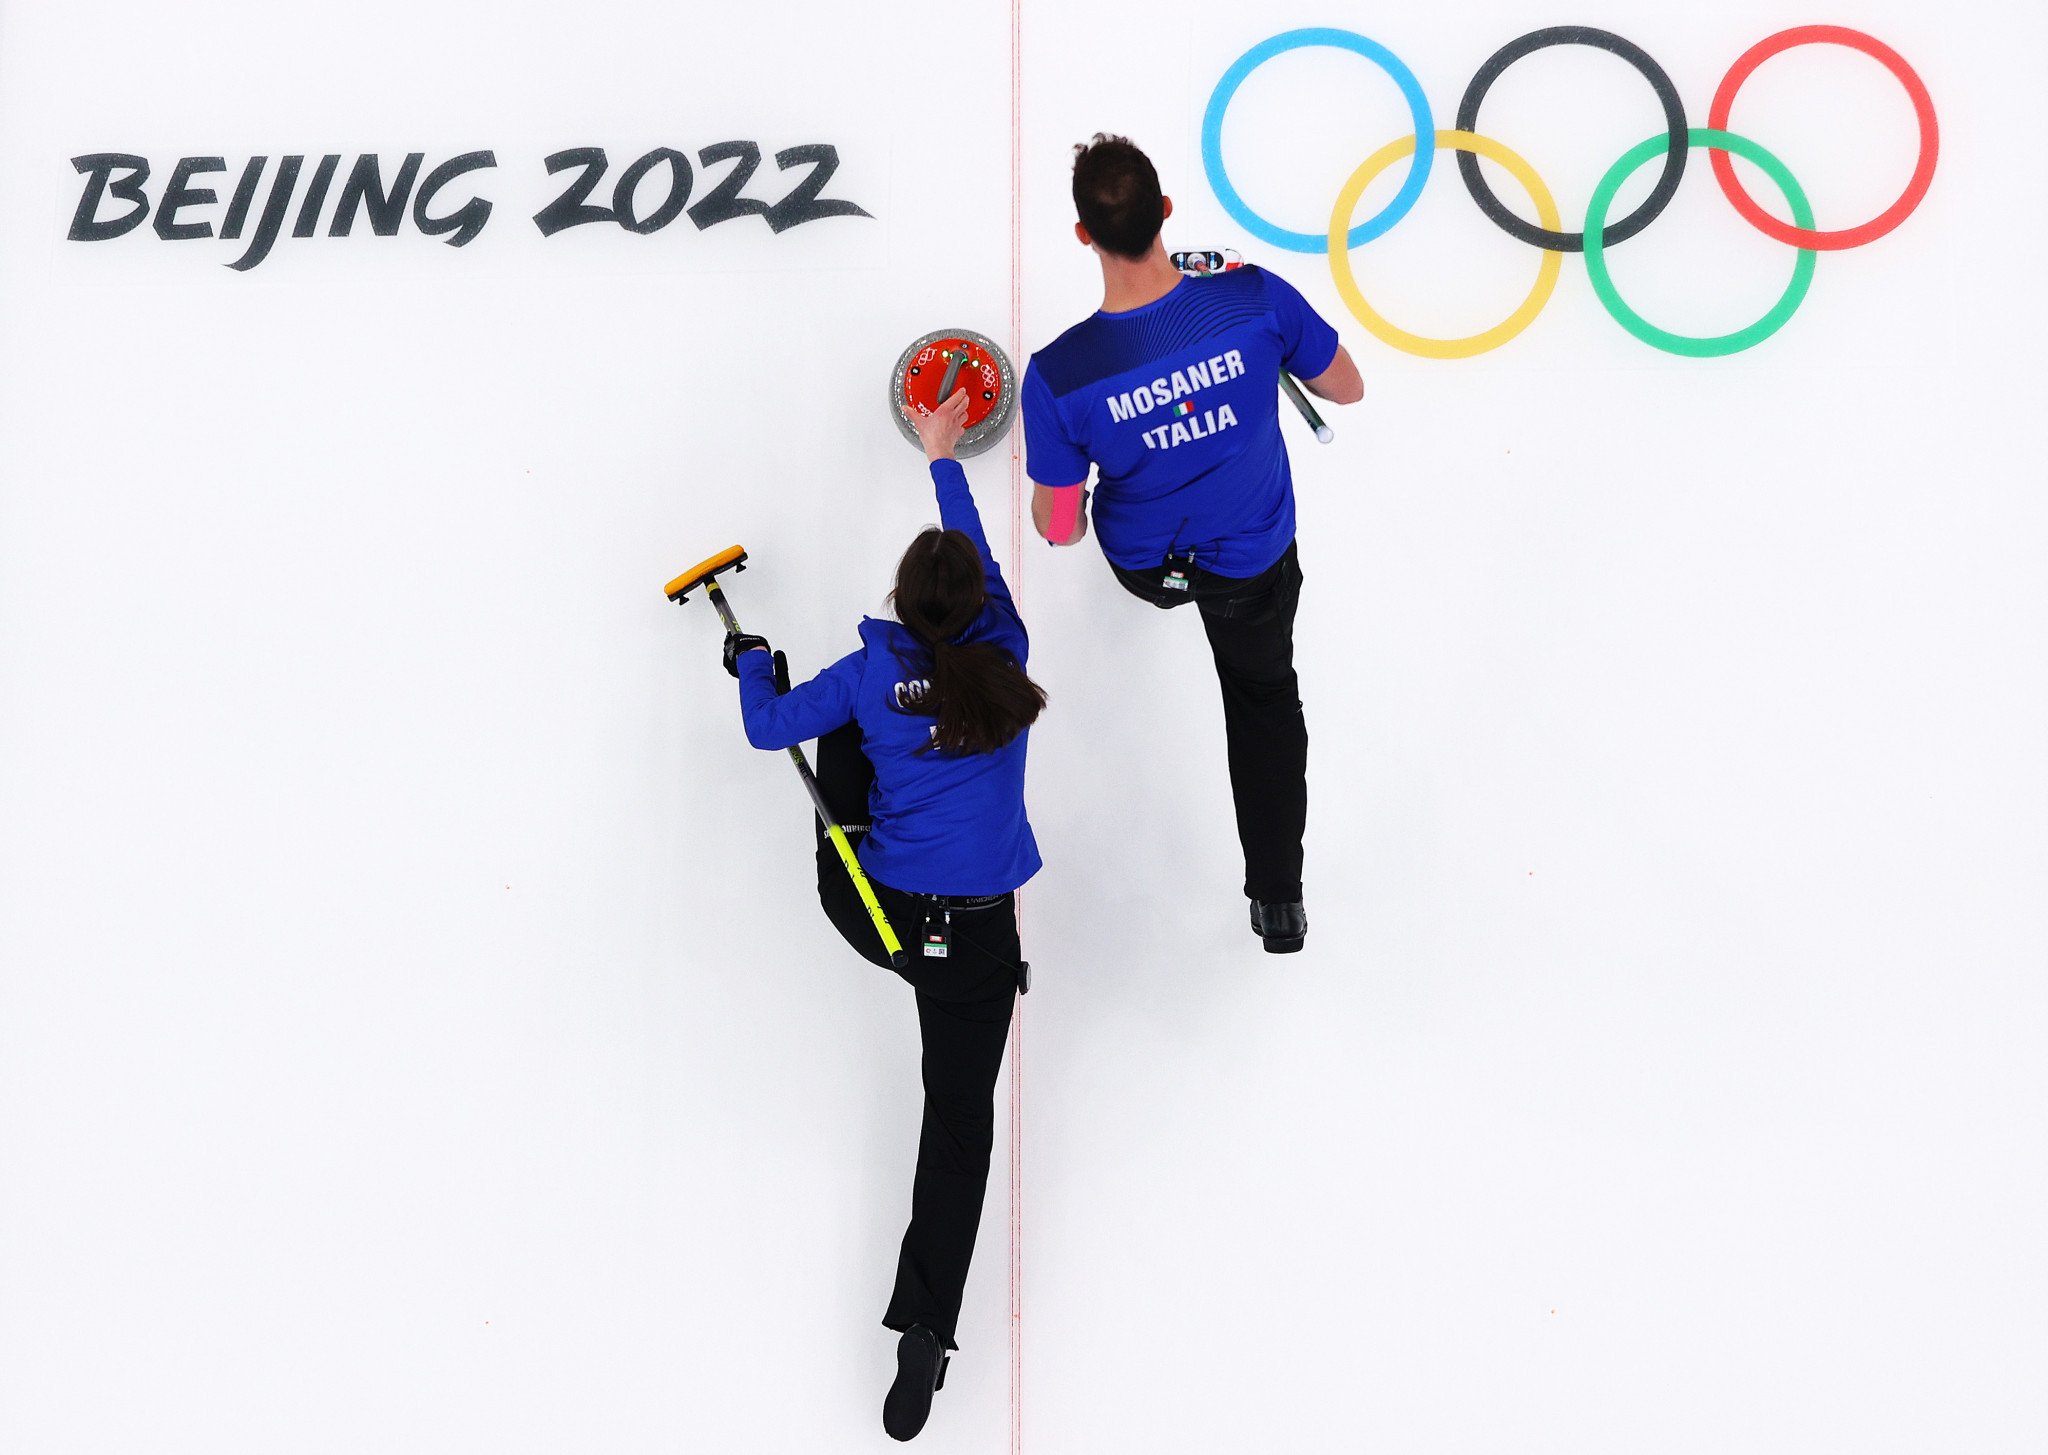 New technical director Pescia to lead Italian curling into Milan Cortina 2026 Winter Olympics